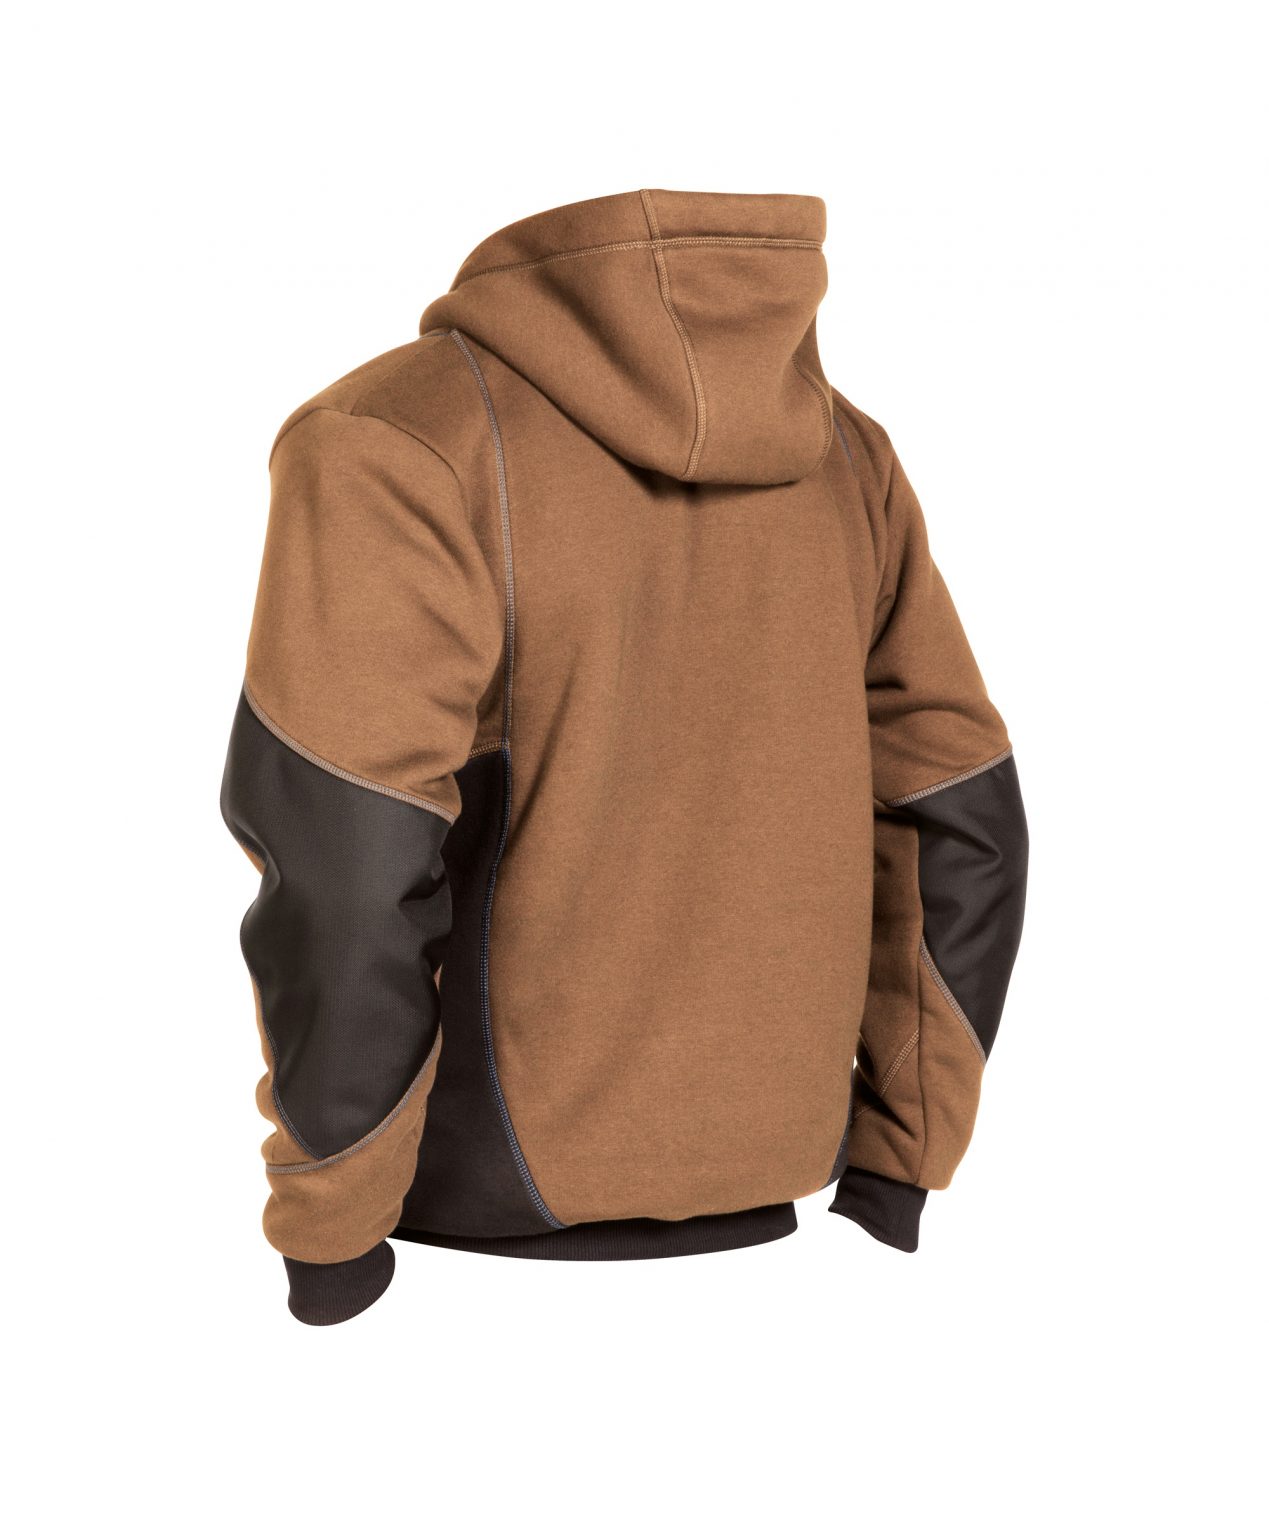 pulse sweatshirt jacket clay brown anthracite grey detail 2